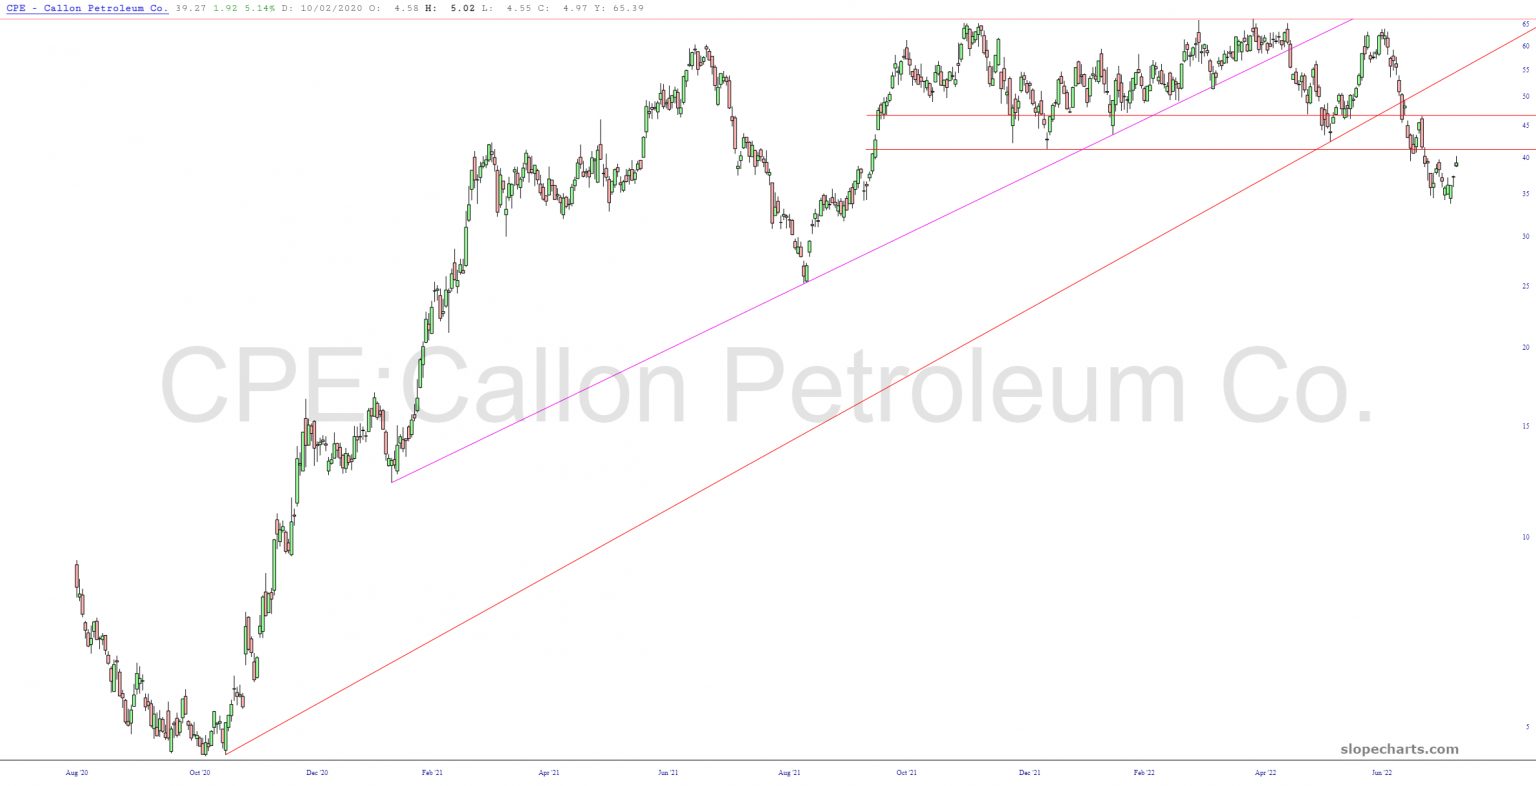 Callon Petroleum Chart.